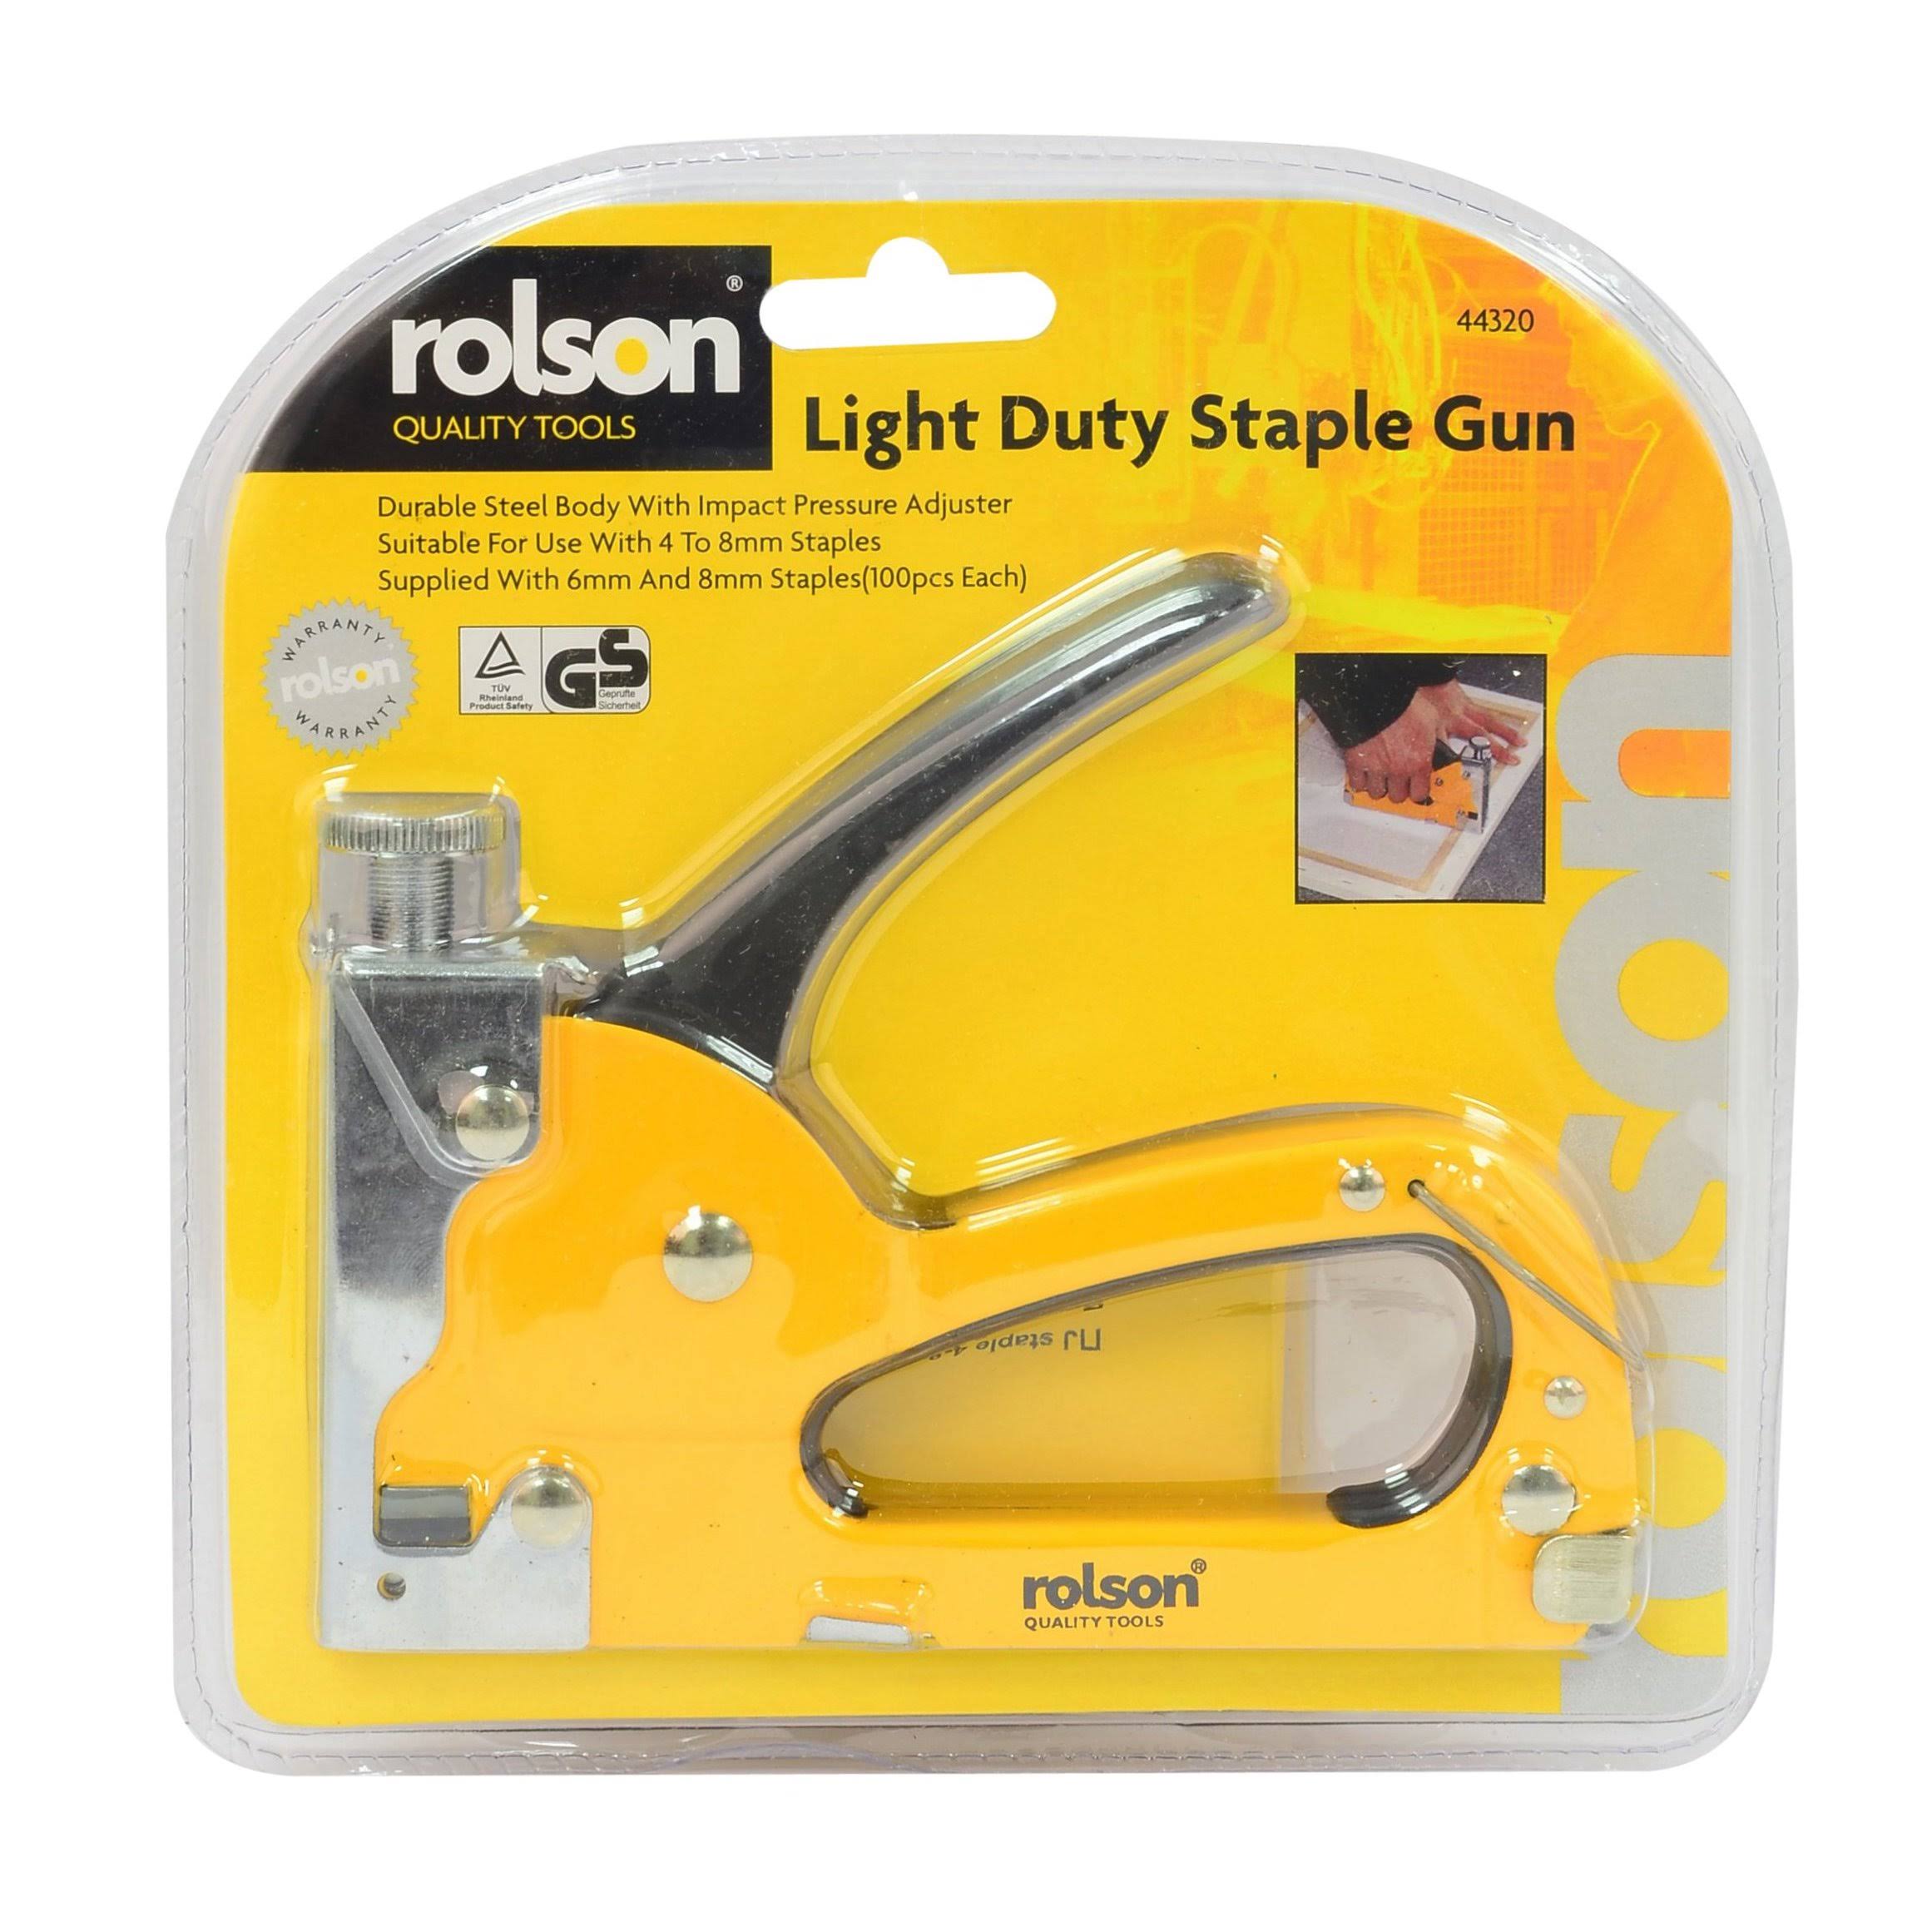 Rolson Light Duty Staple Gun with 200 Staples